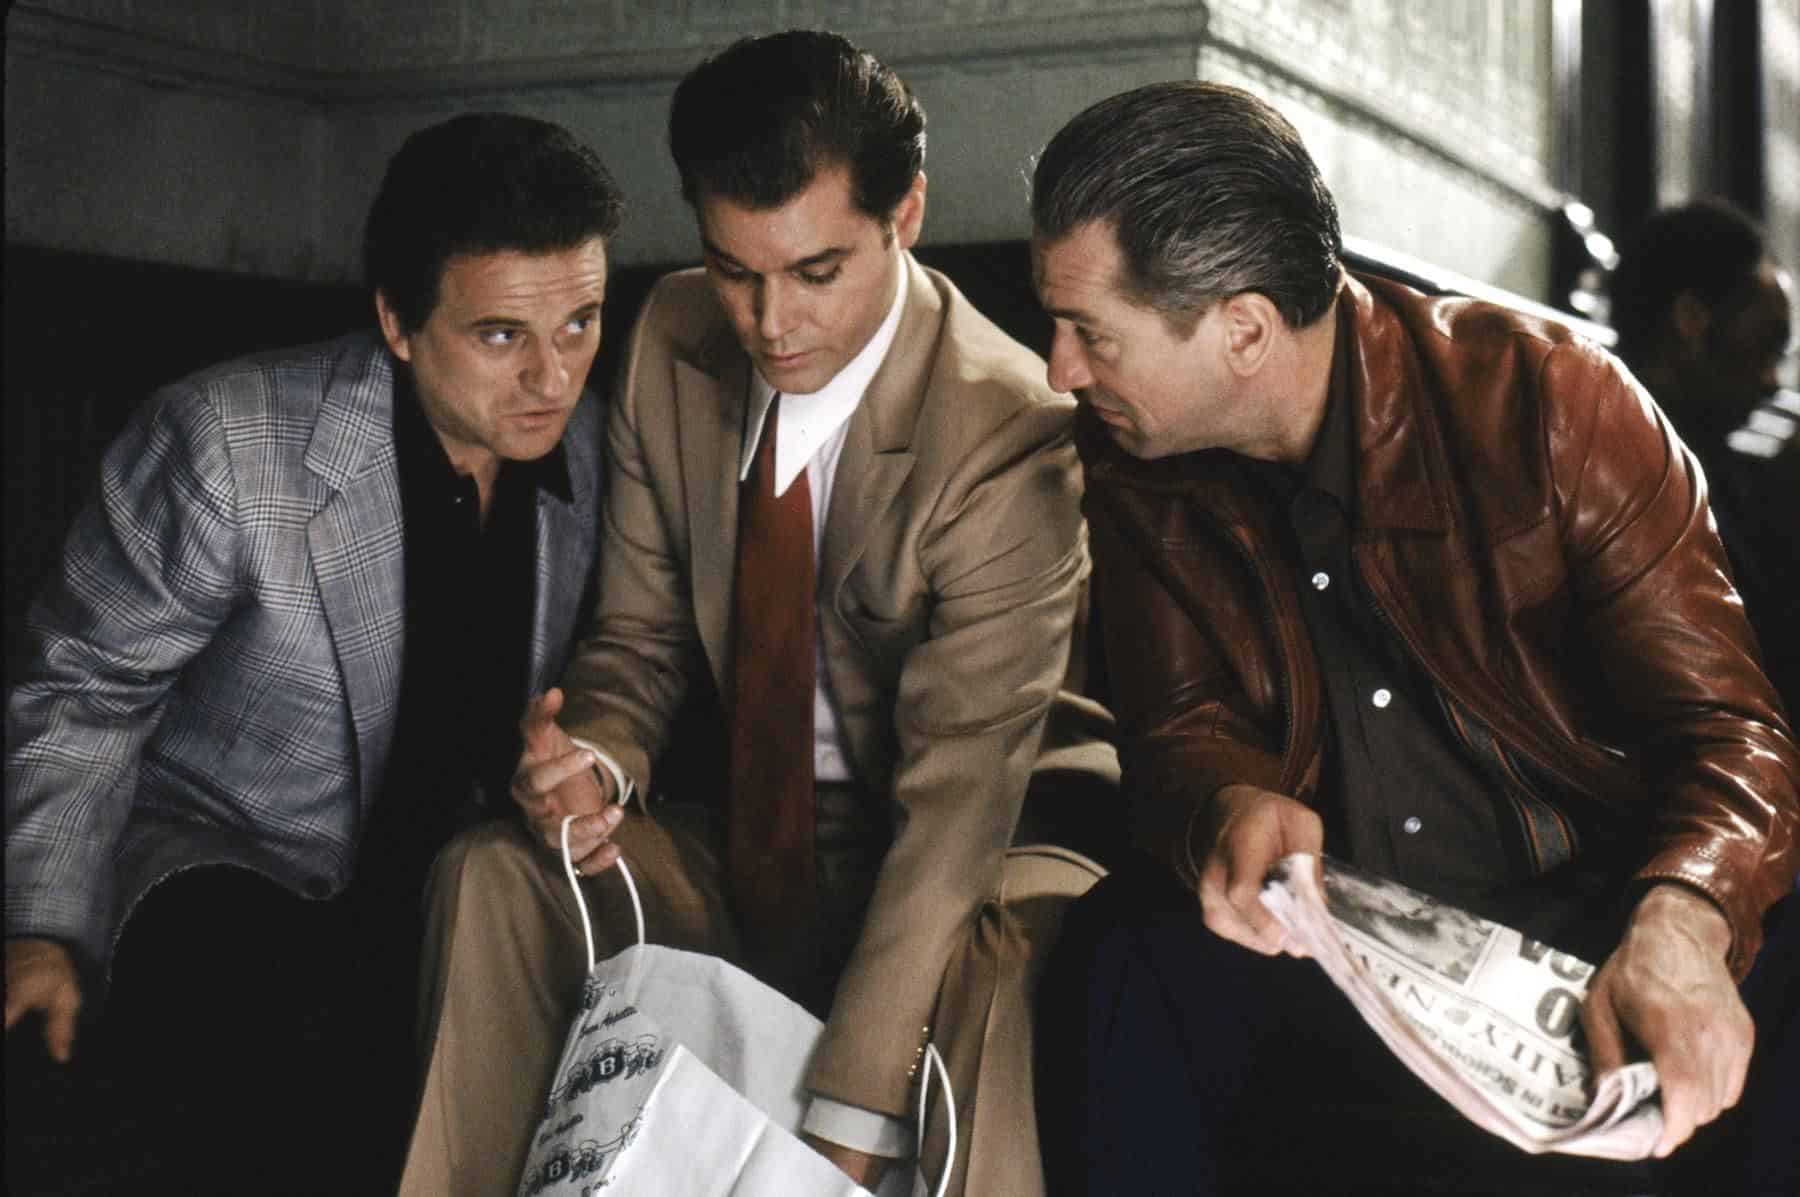 Robert De Niro, Ray Liotta, and Joe Pesci in Goodfellas 